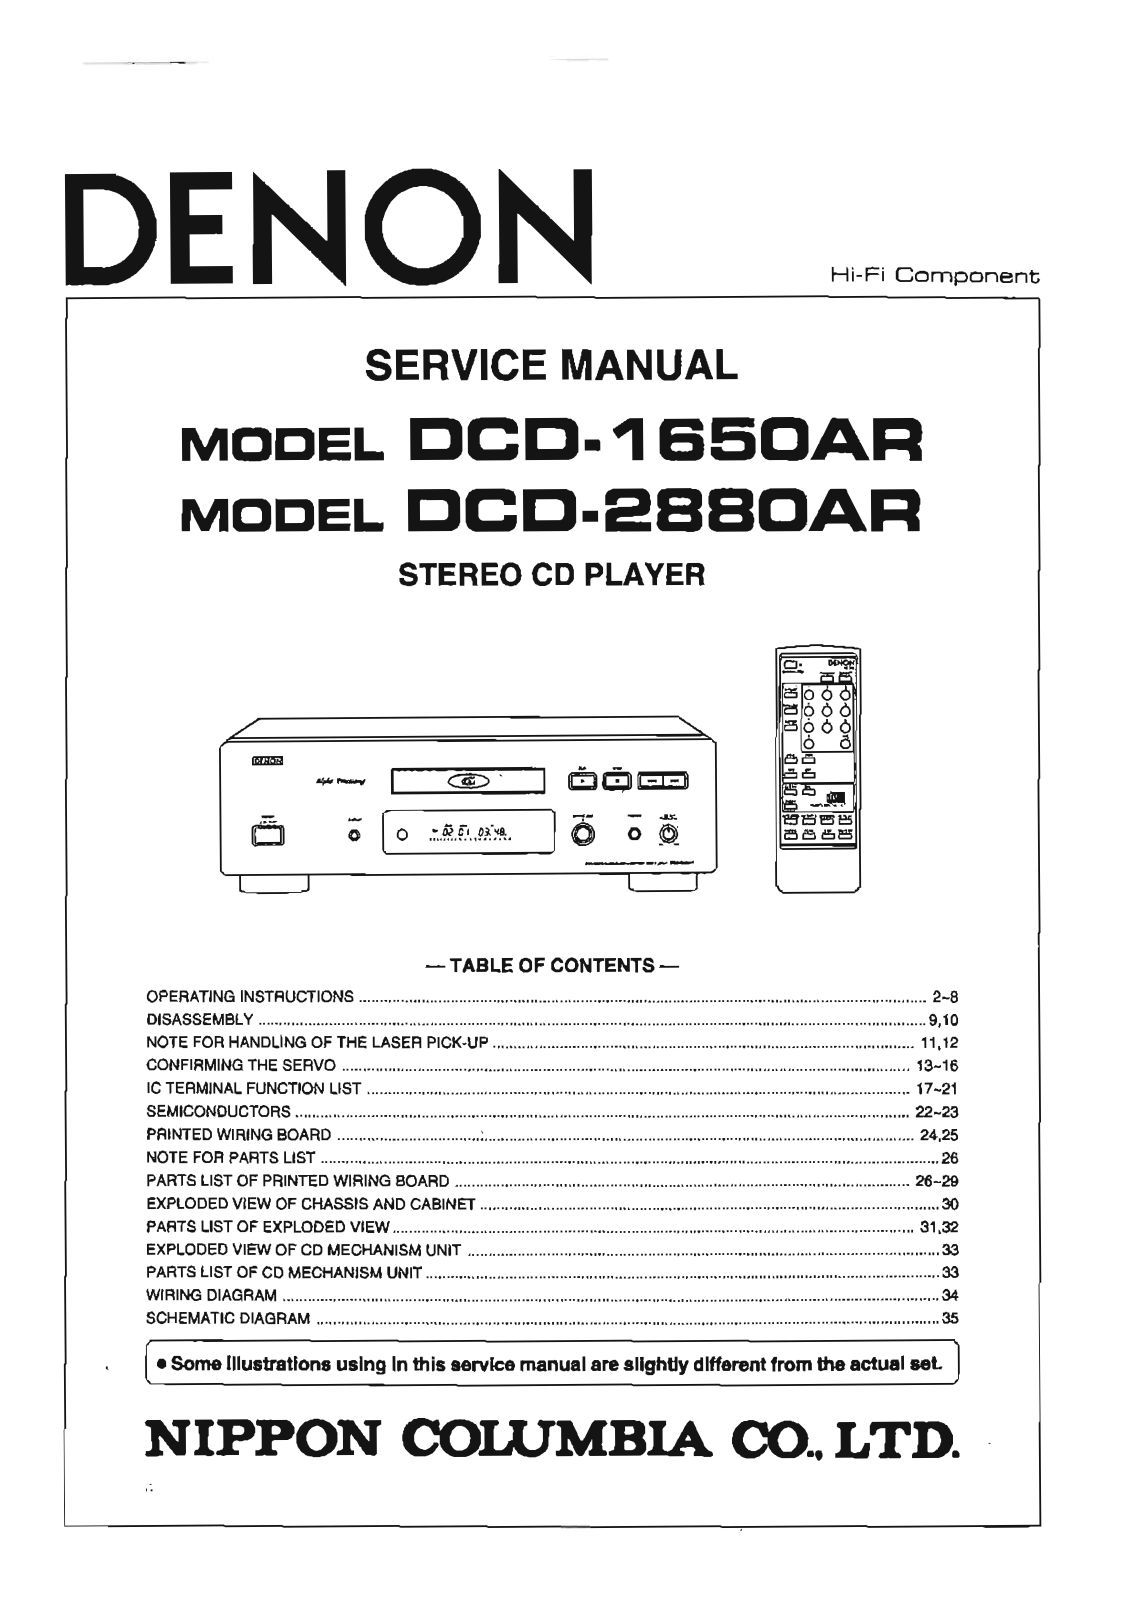 Denon DCD-1650AR Service Manual